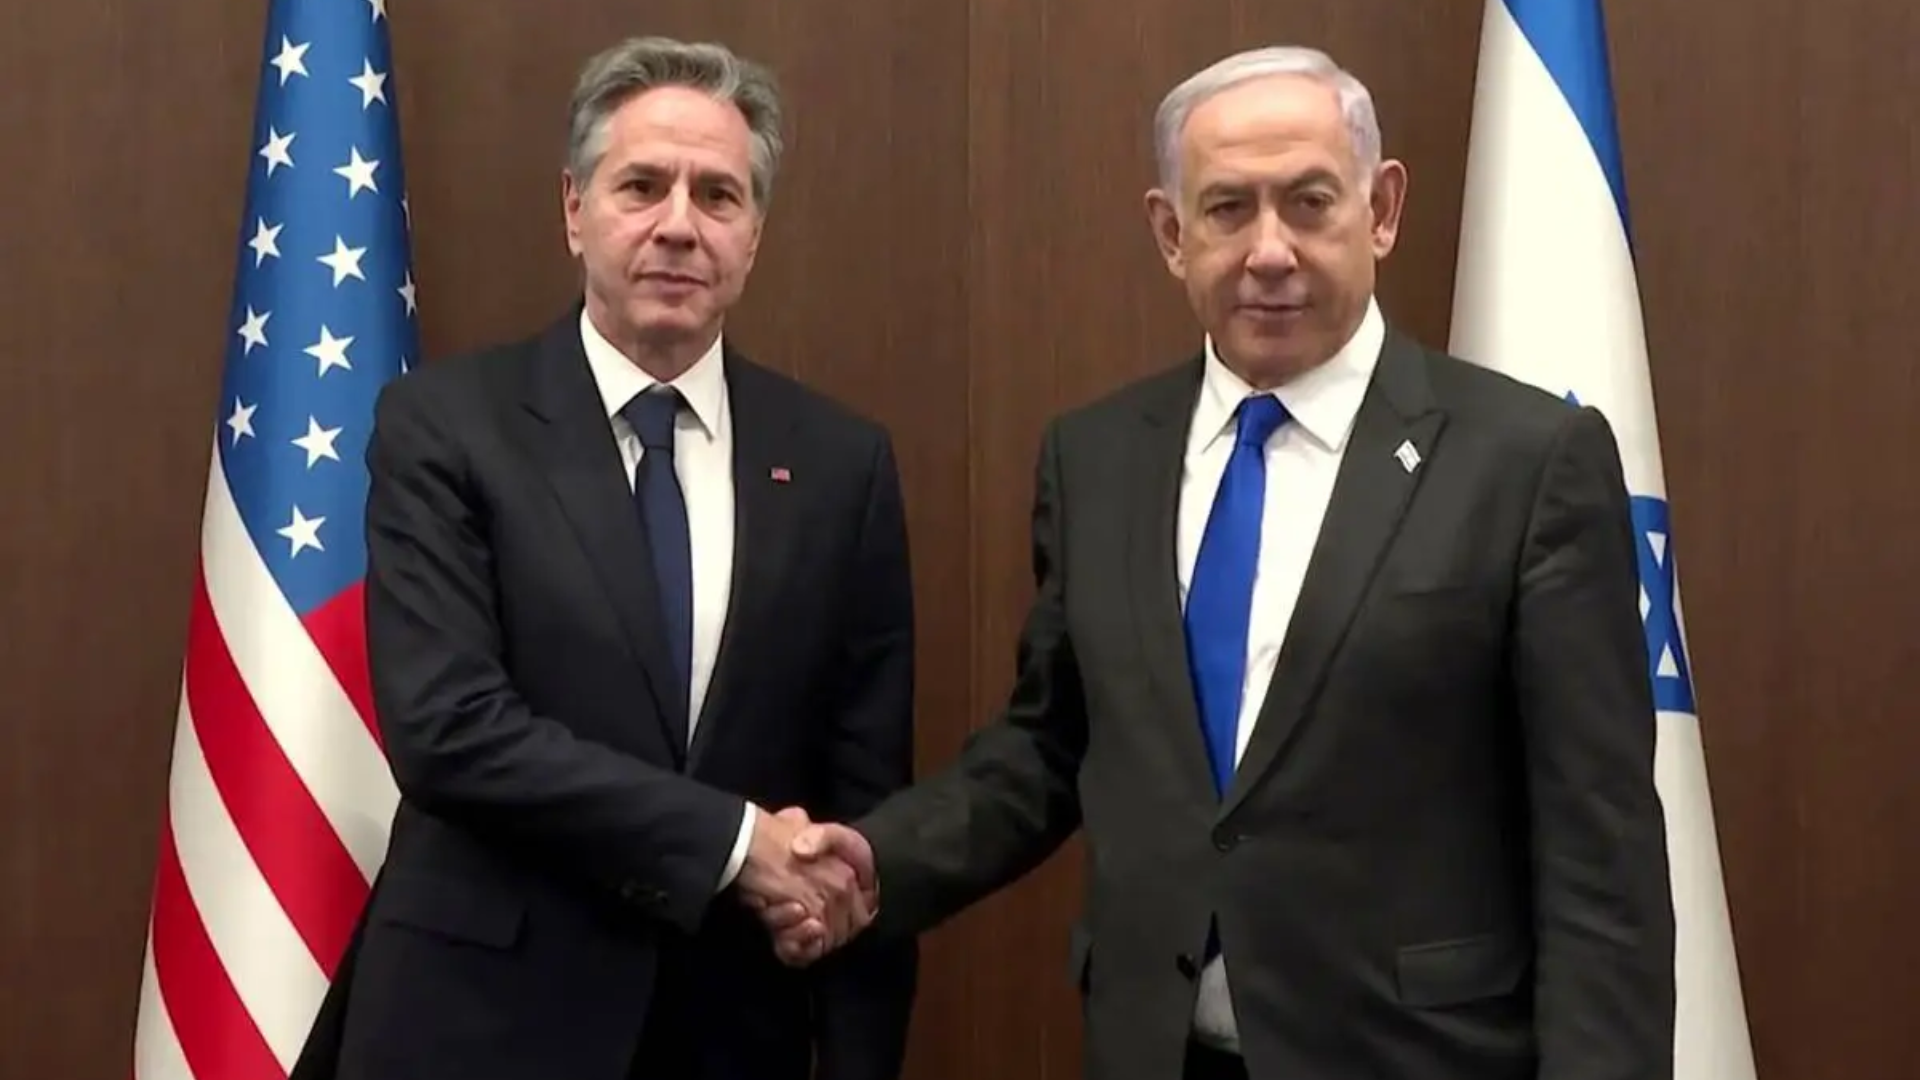 Gaza Ceasefire? US Secretary Talks with Israel PM Netanyahu